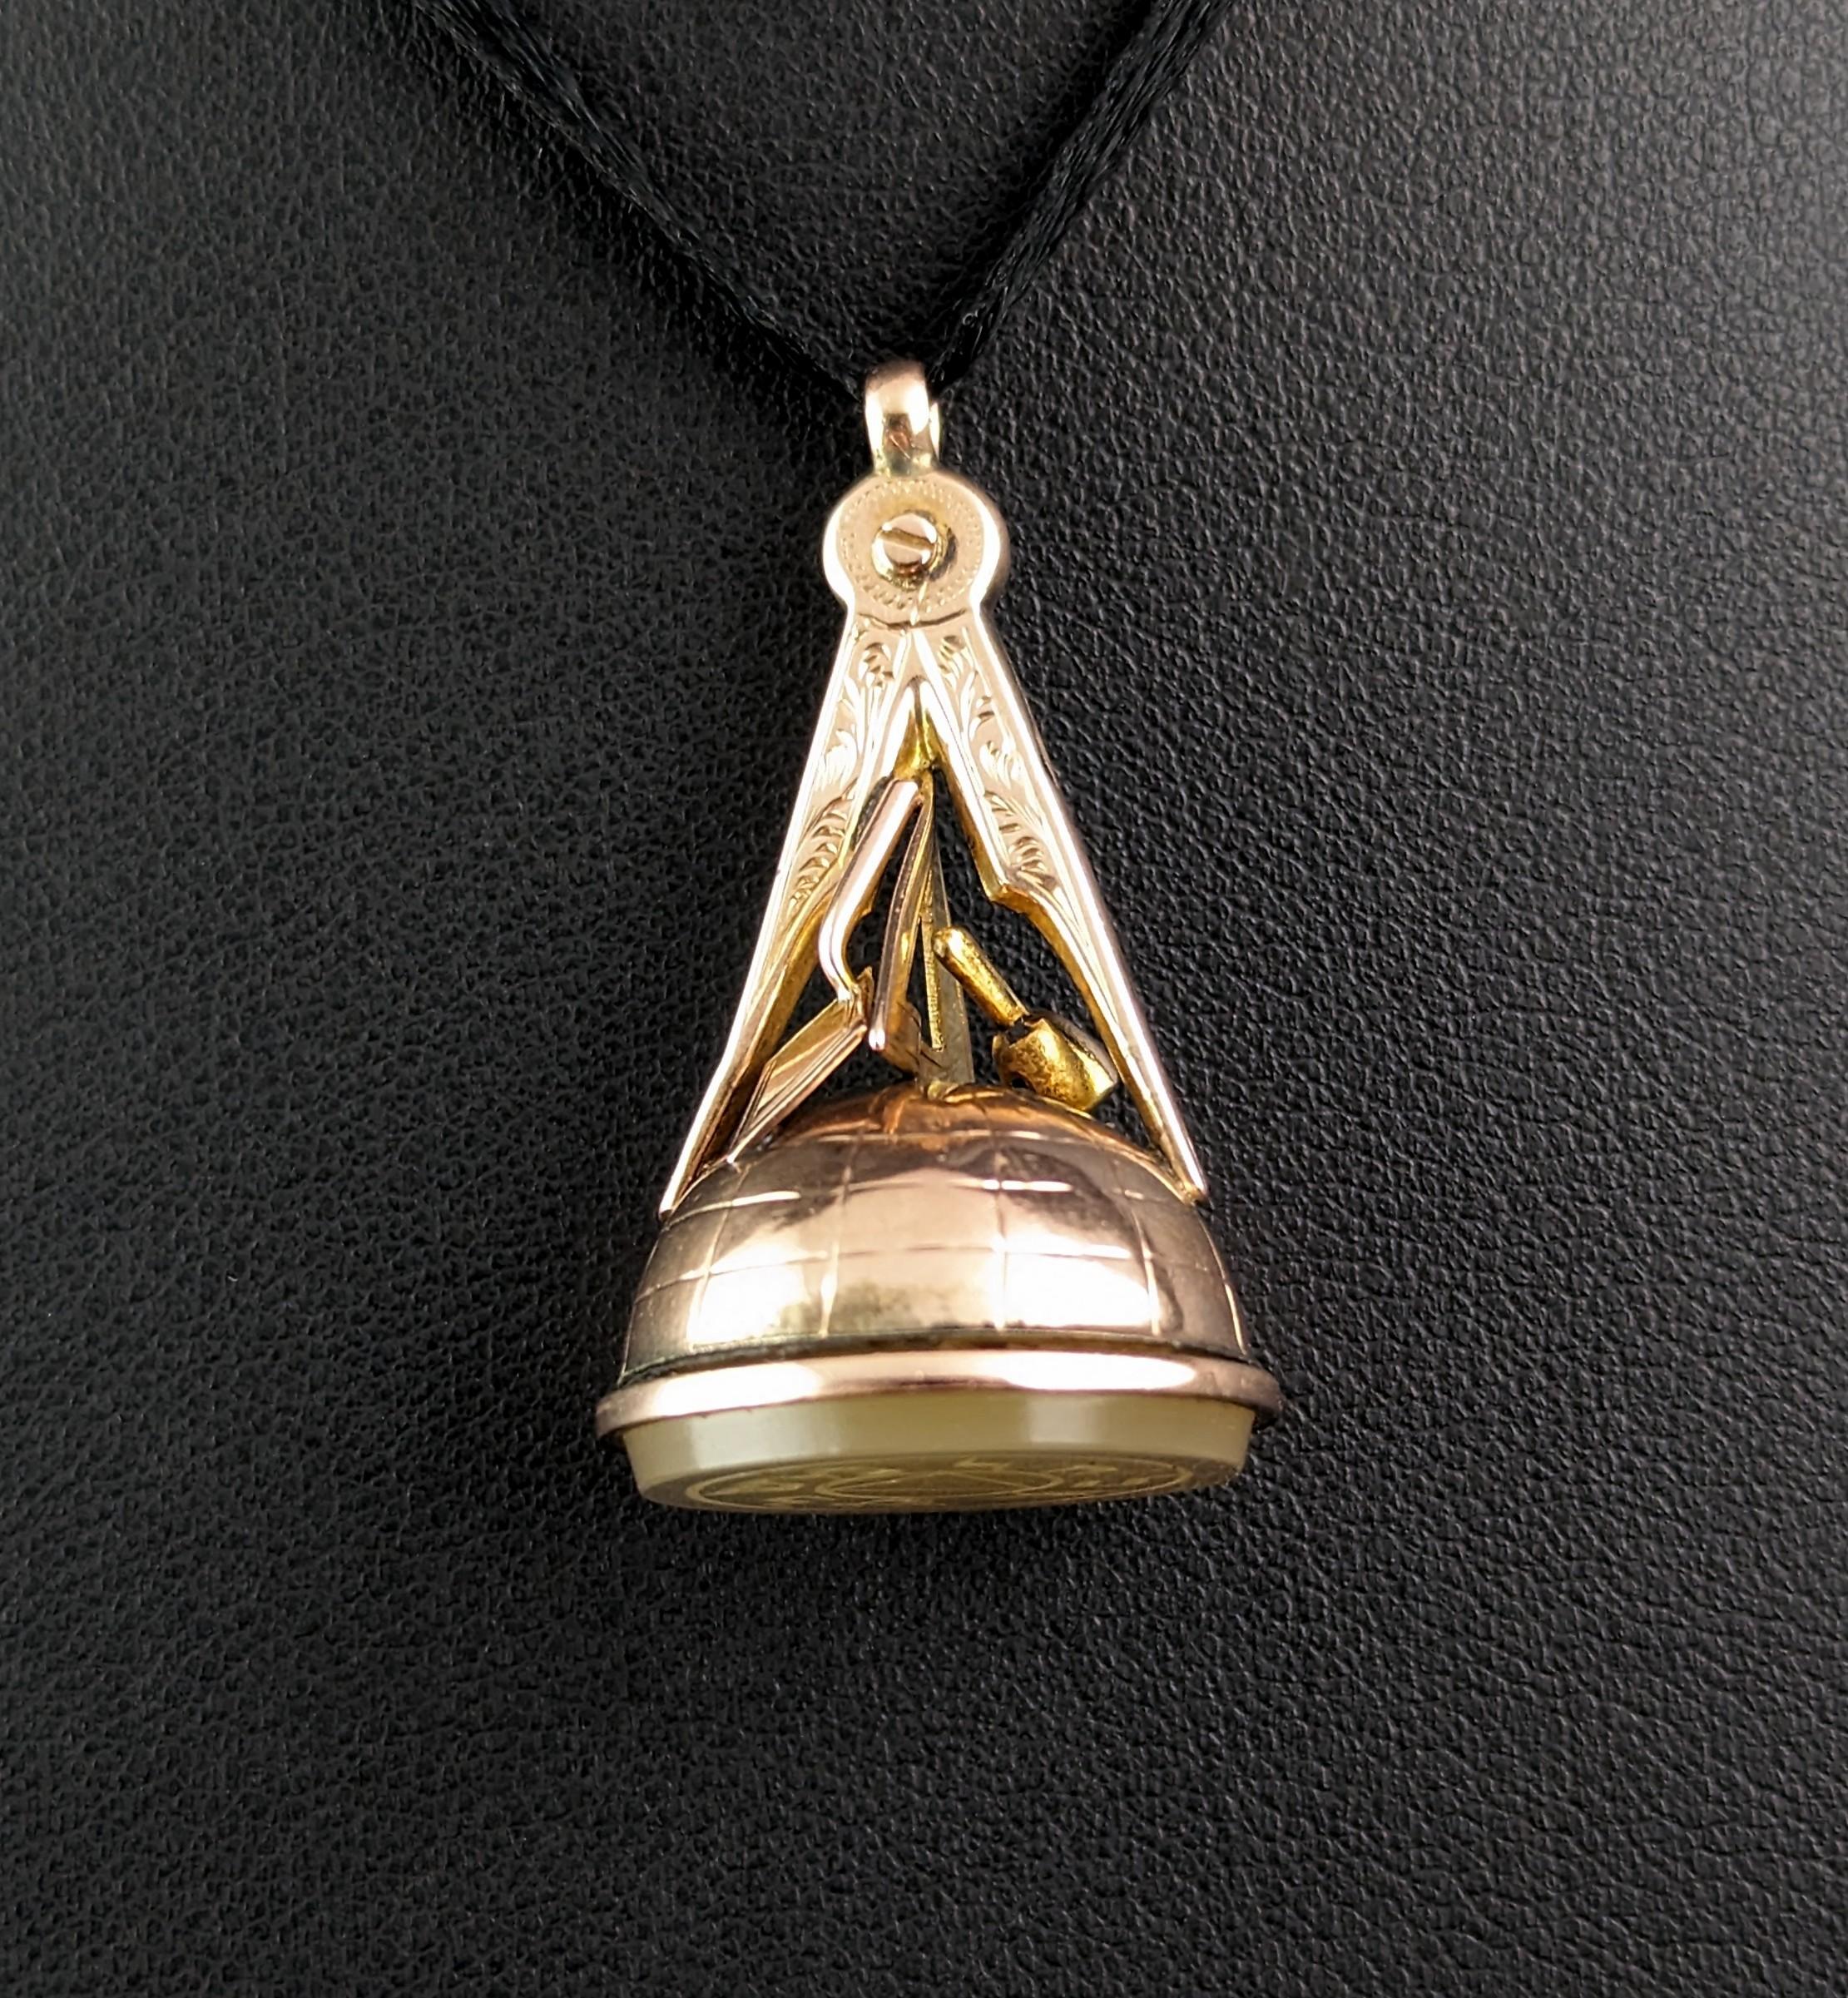 Antique 9k gold Masonic seal fob pendant, chalcedony  1